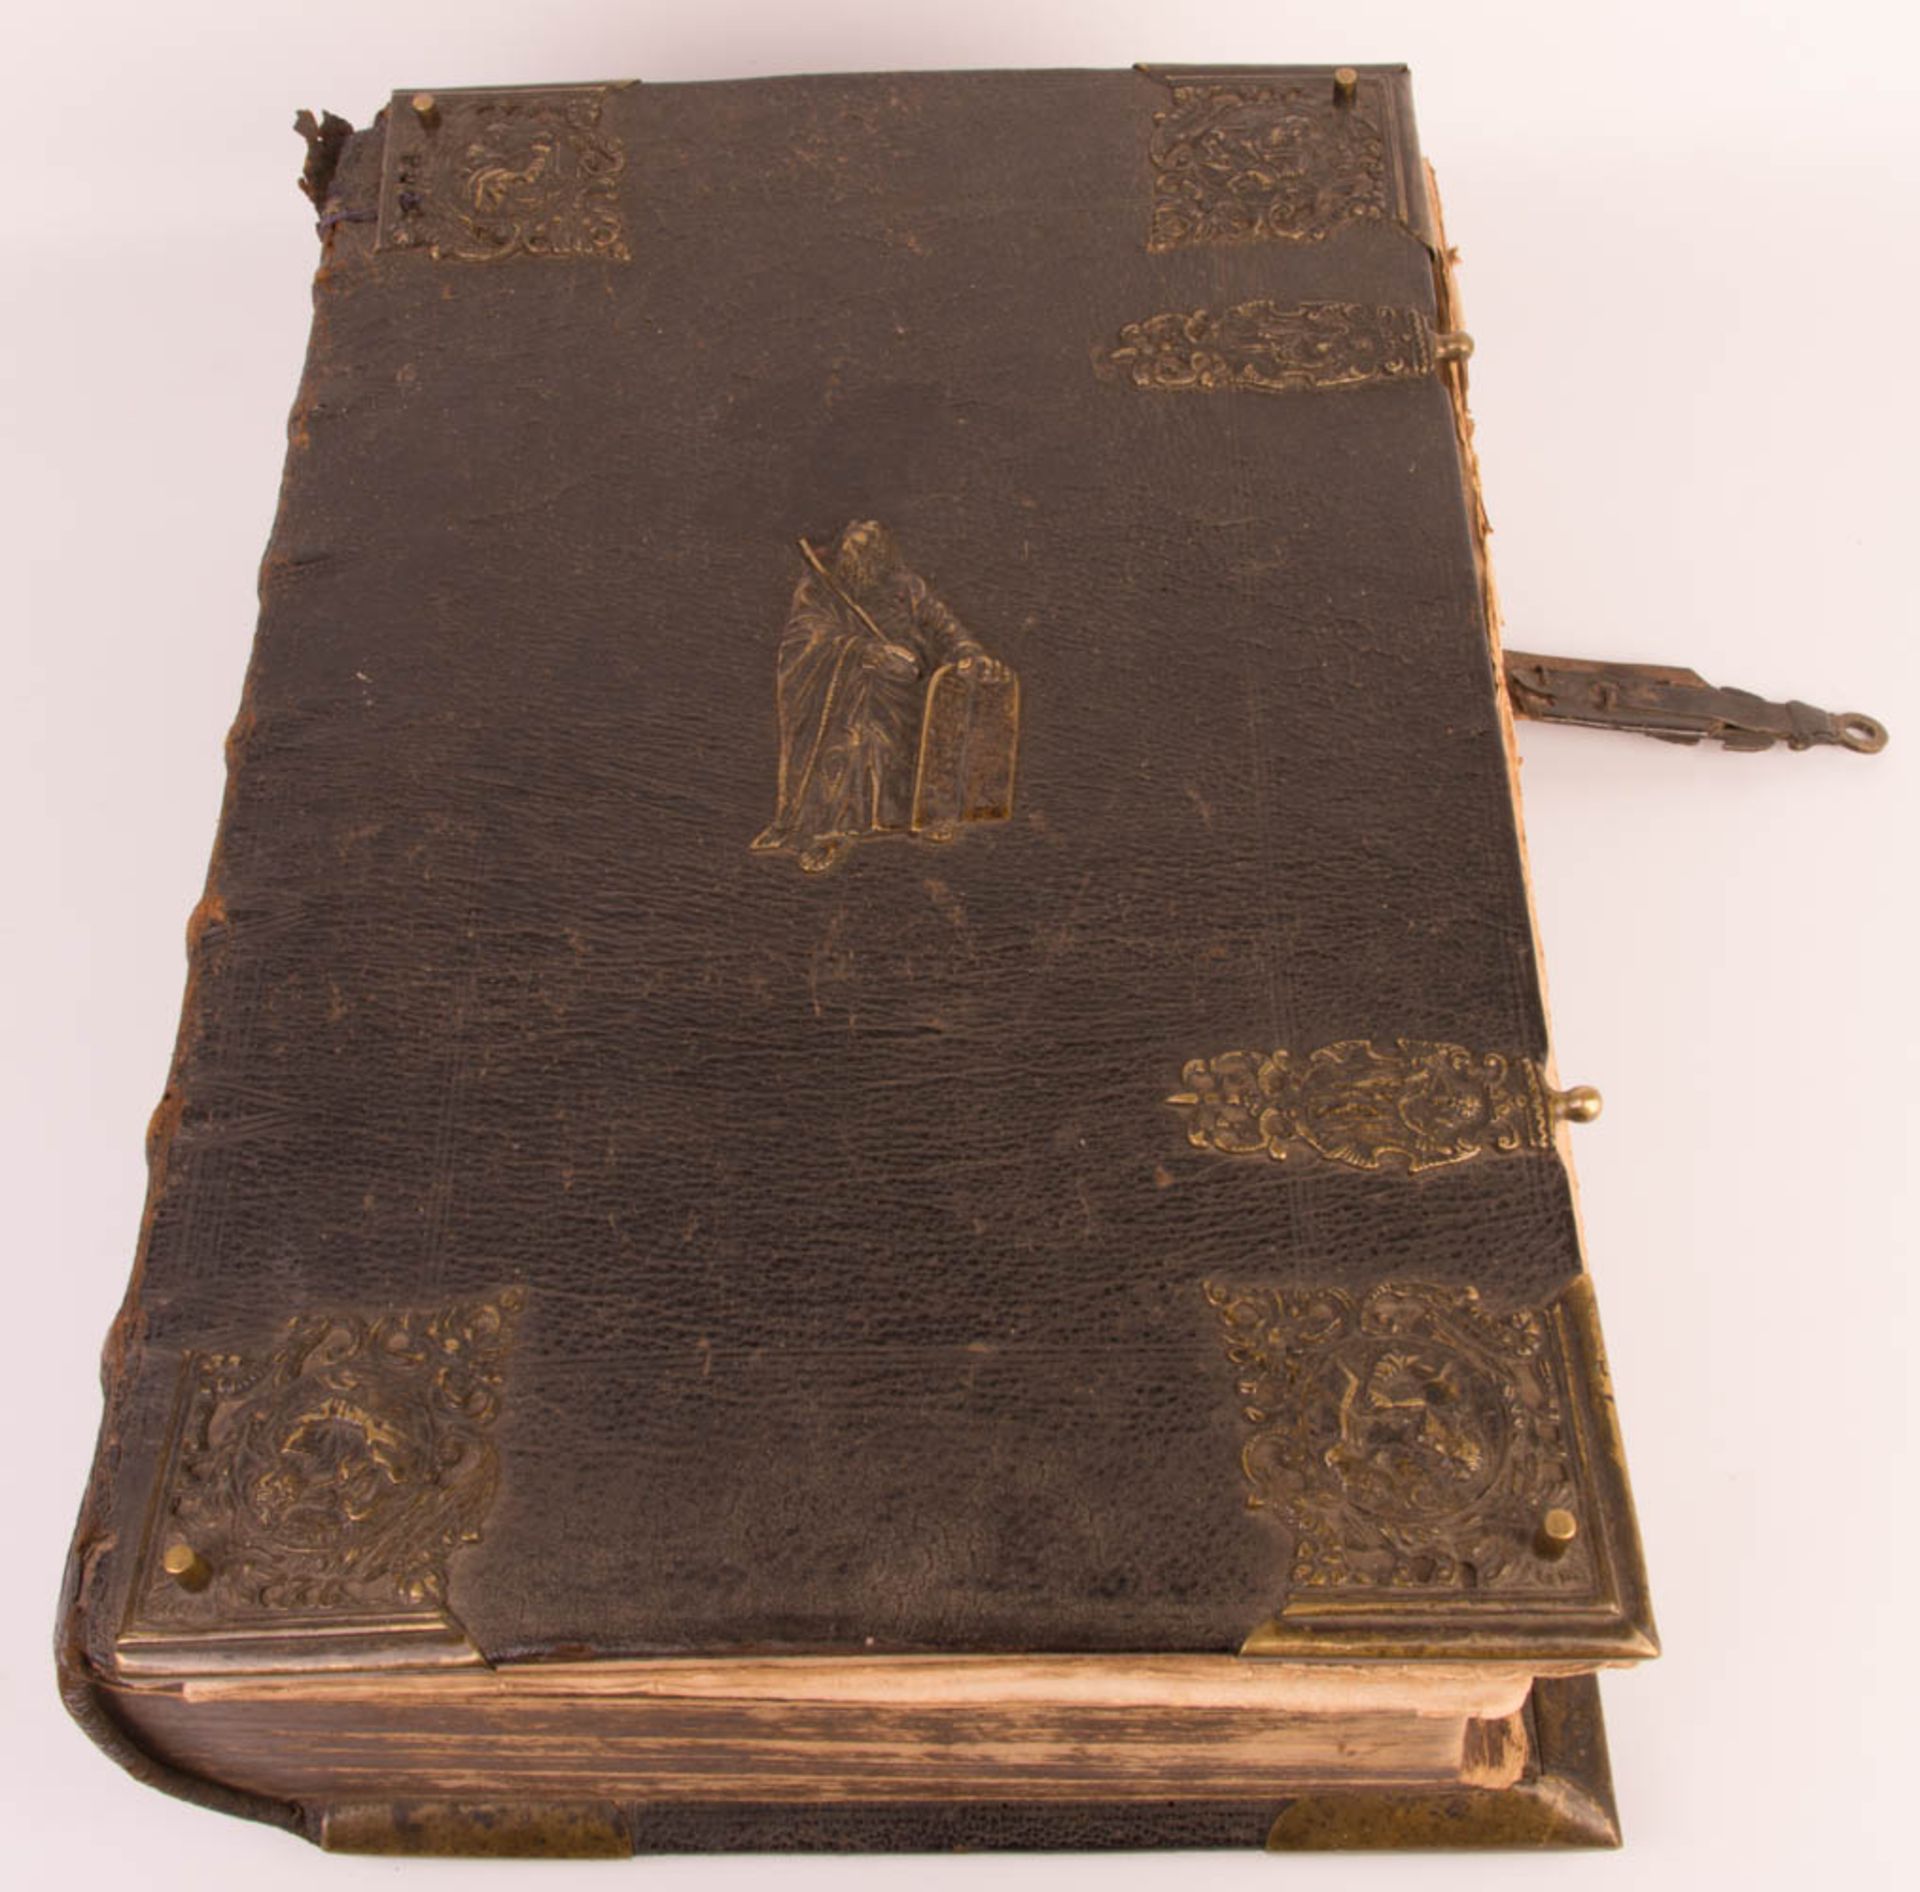 Biblia germanica, Kurfürstenbibel, Joh. Endters Sel. Sohn und Erben, Nürnberg, 1708.